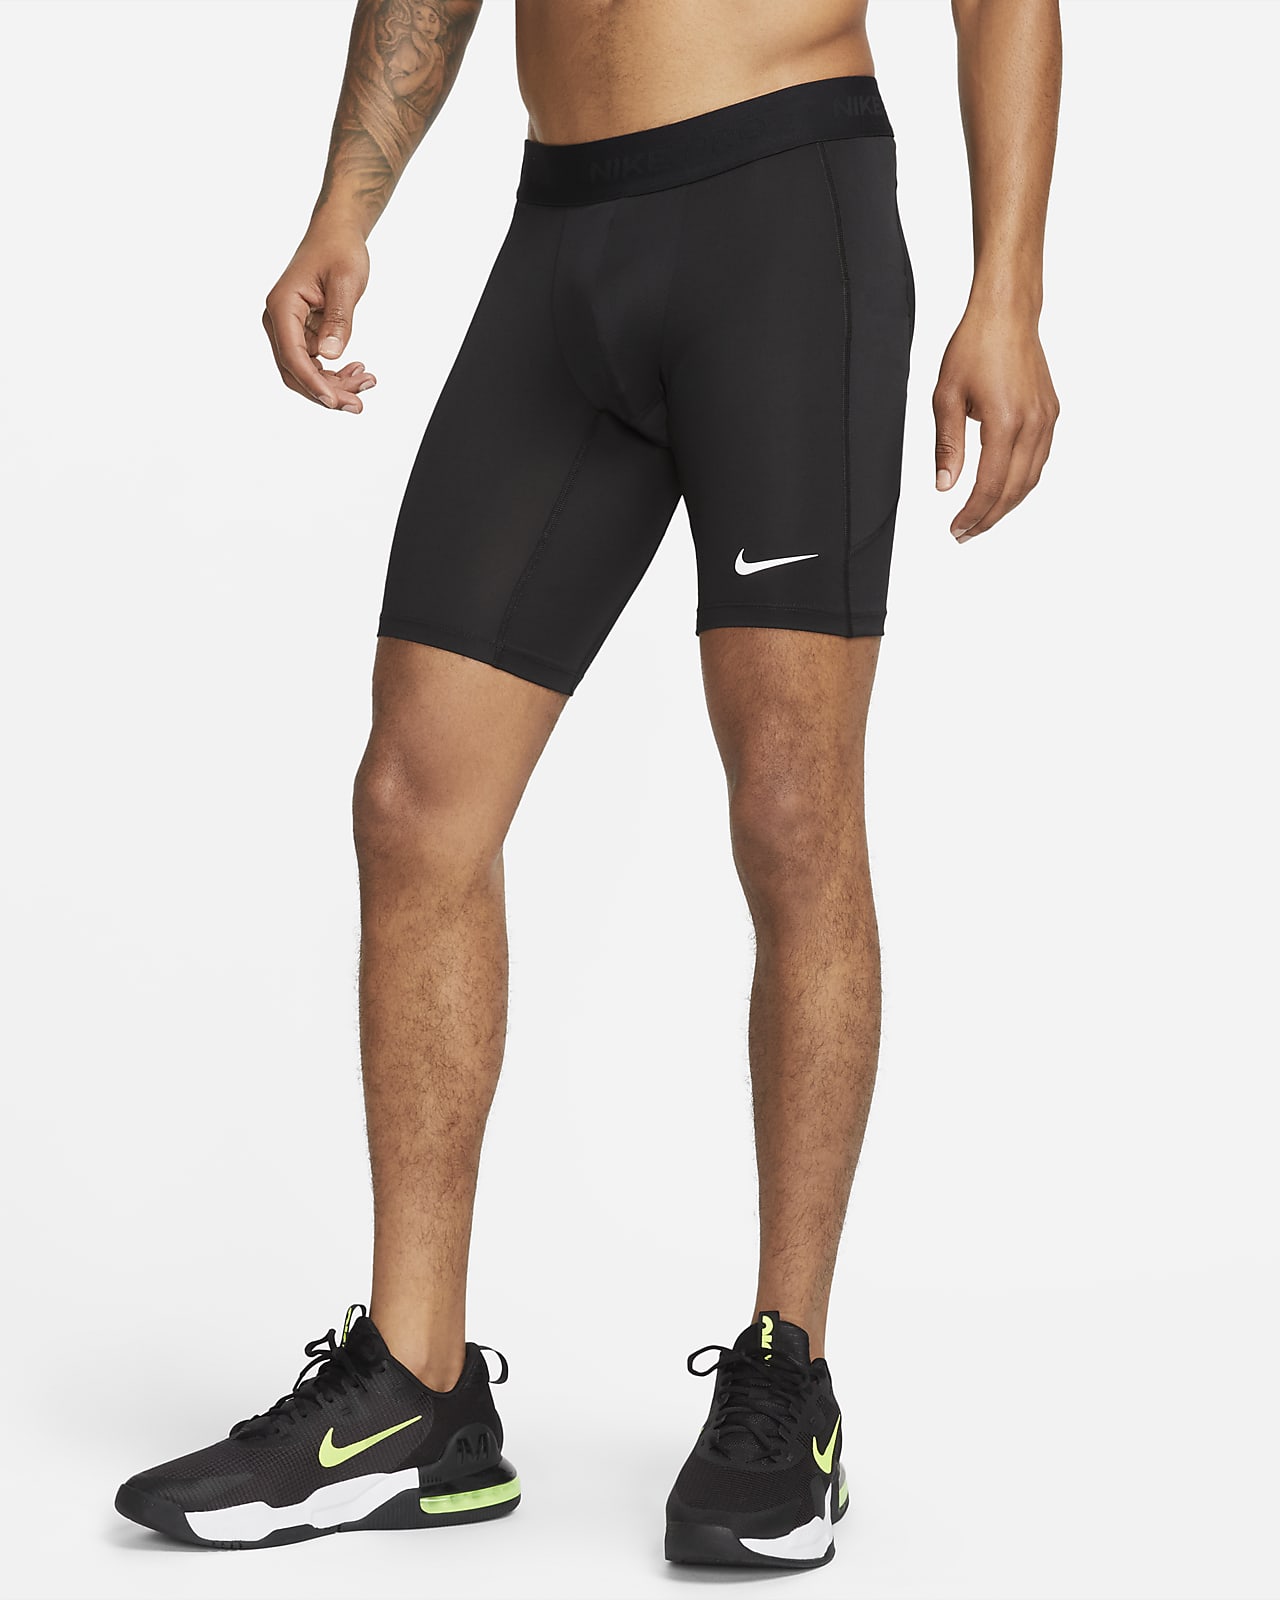 Nike Pro Pantalons curts llargs Dri-FIT de fitnes - Home